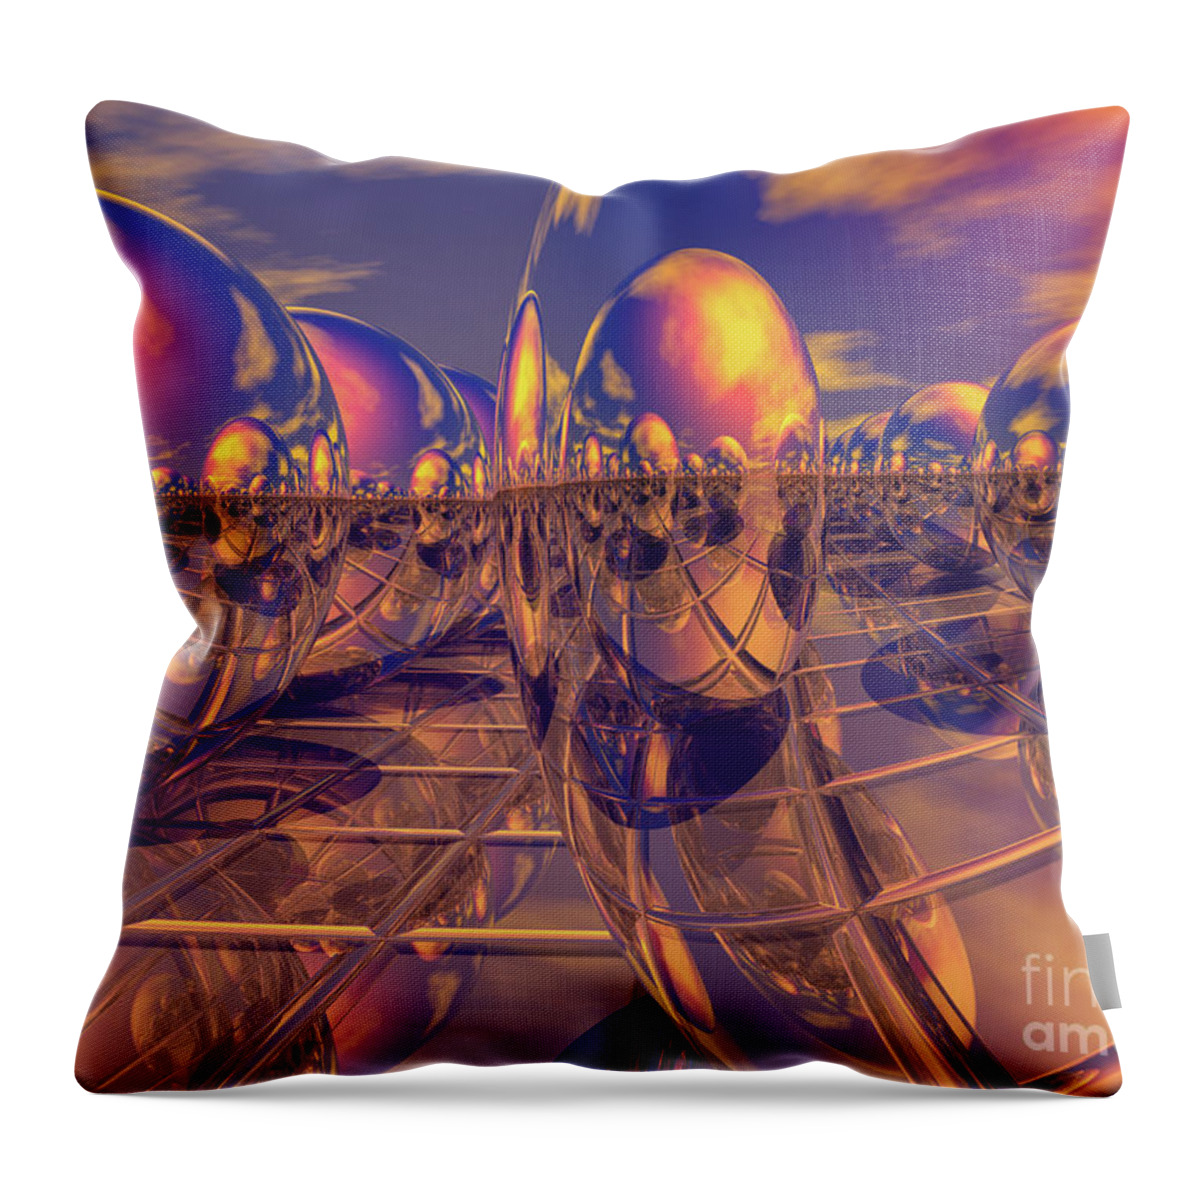 Retro Throw Pillow featuring the digital art Retro Pop Art 3D Spheres by Phil Perkins